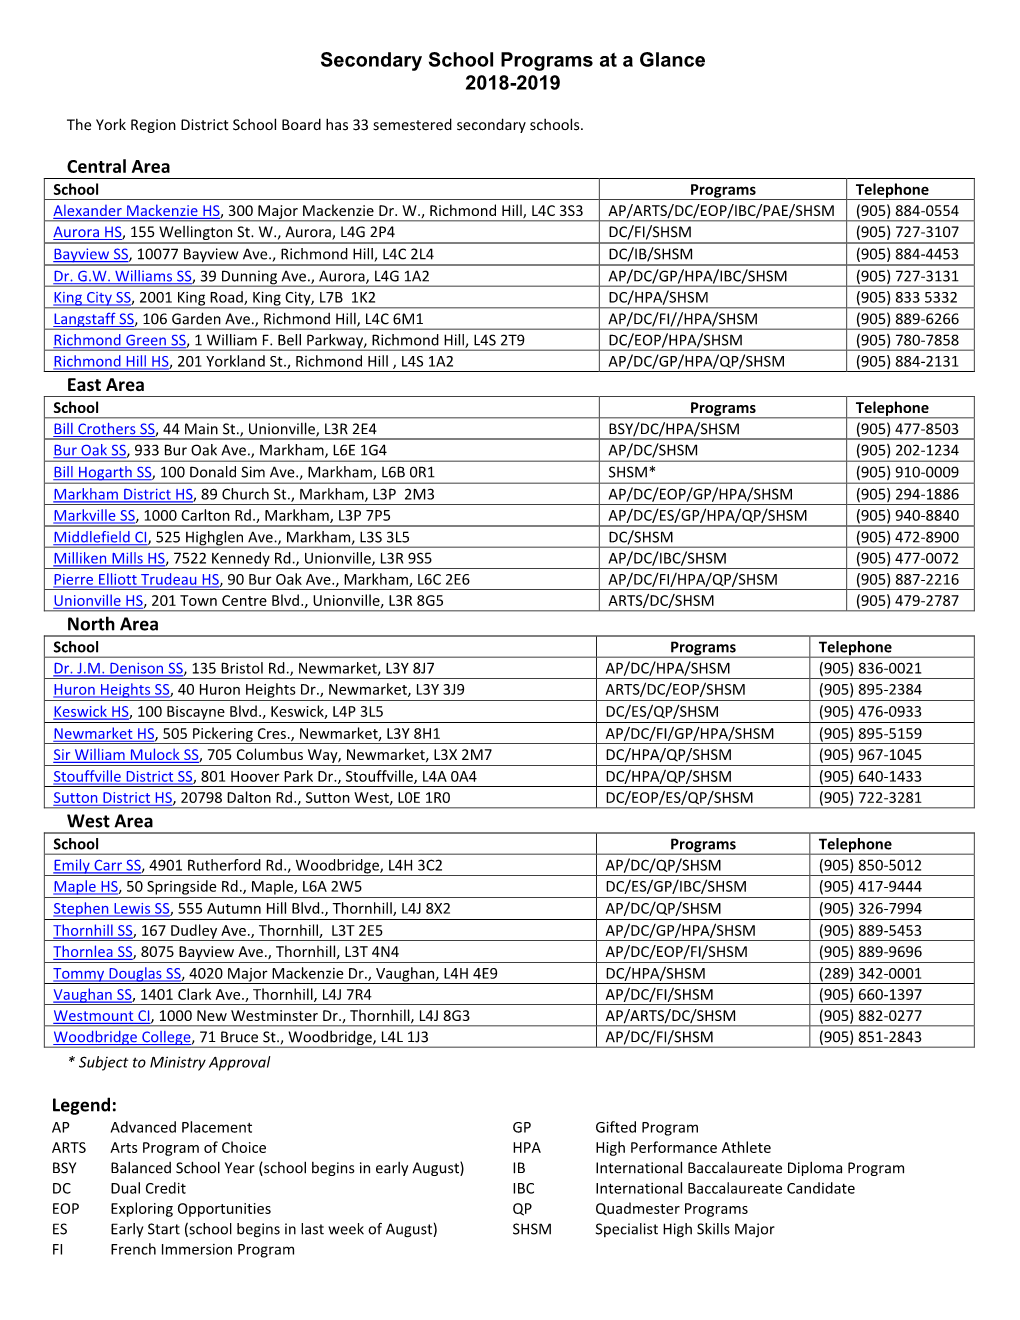 List of York Region District School Board Secondary Schools